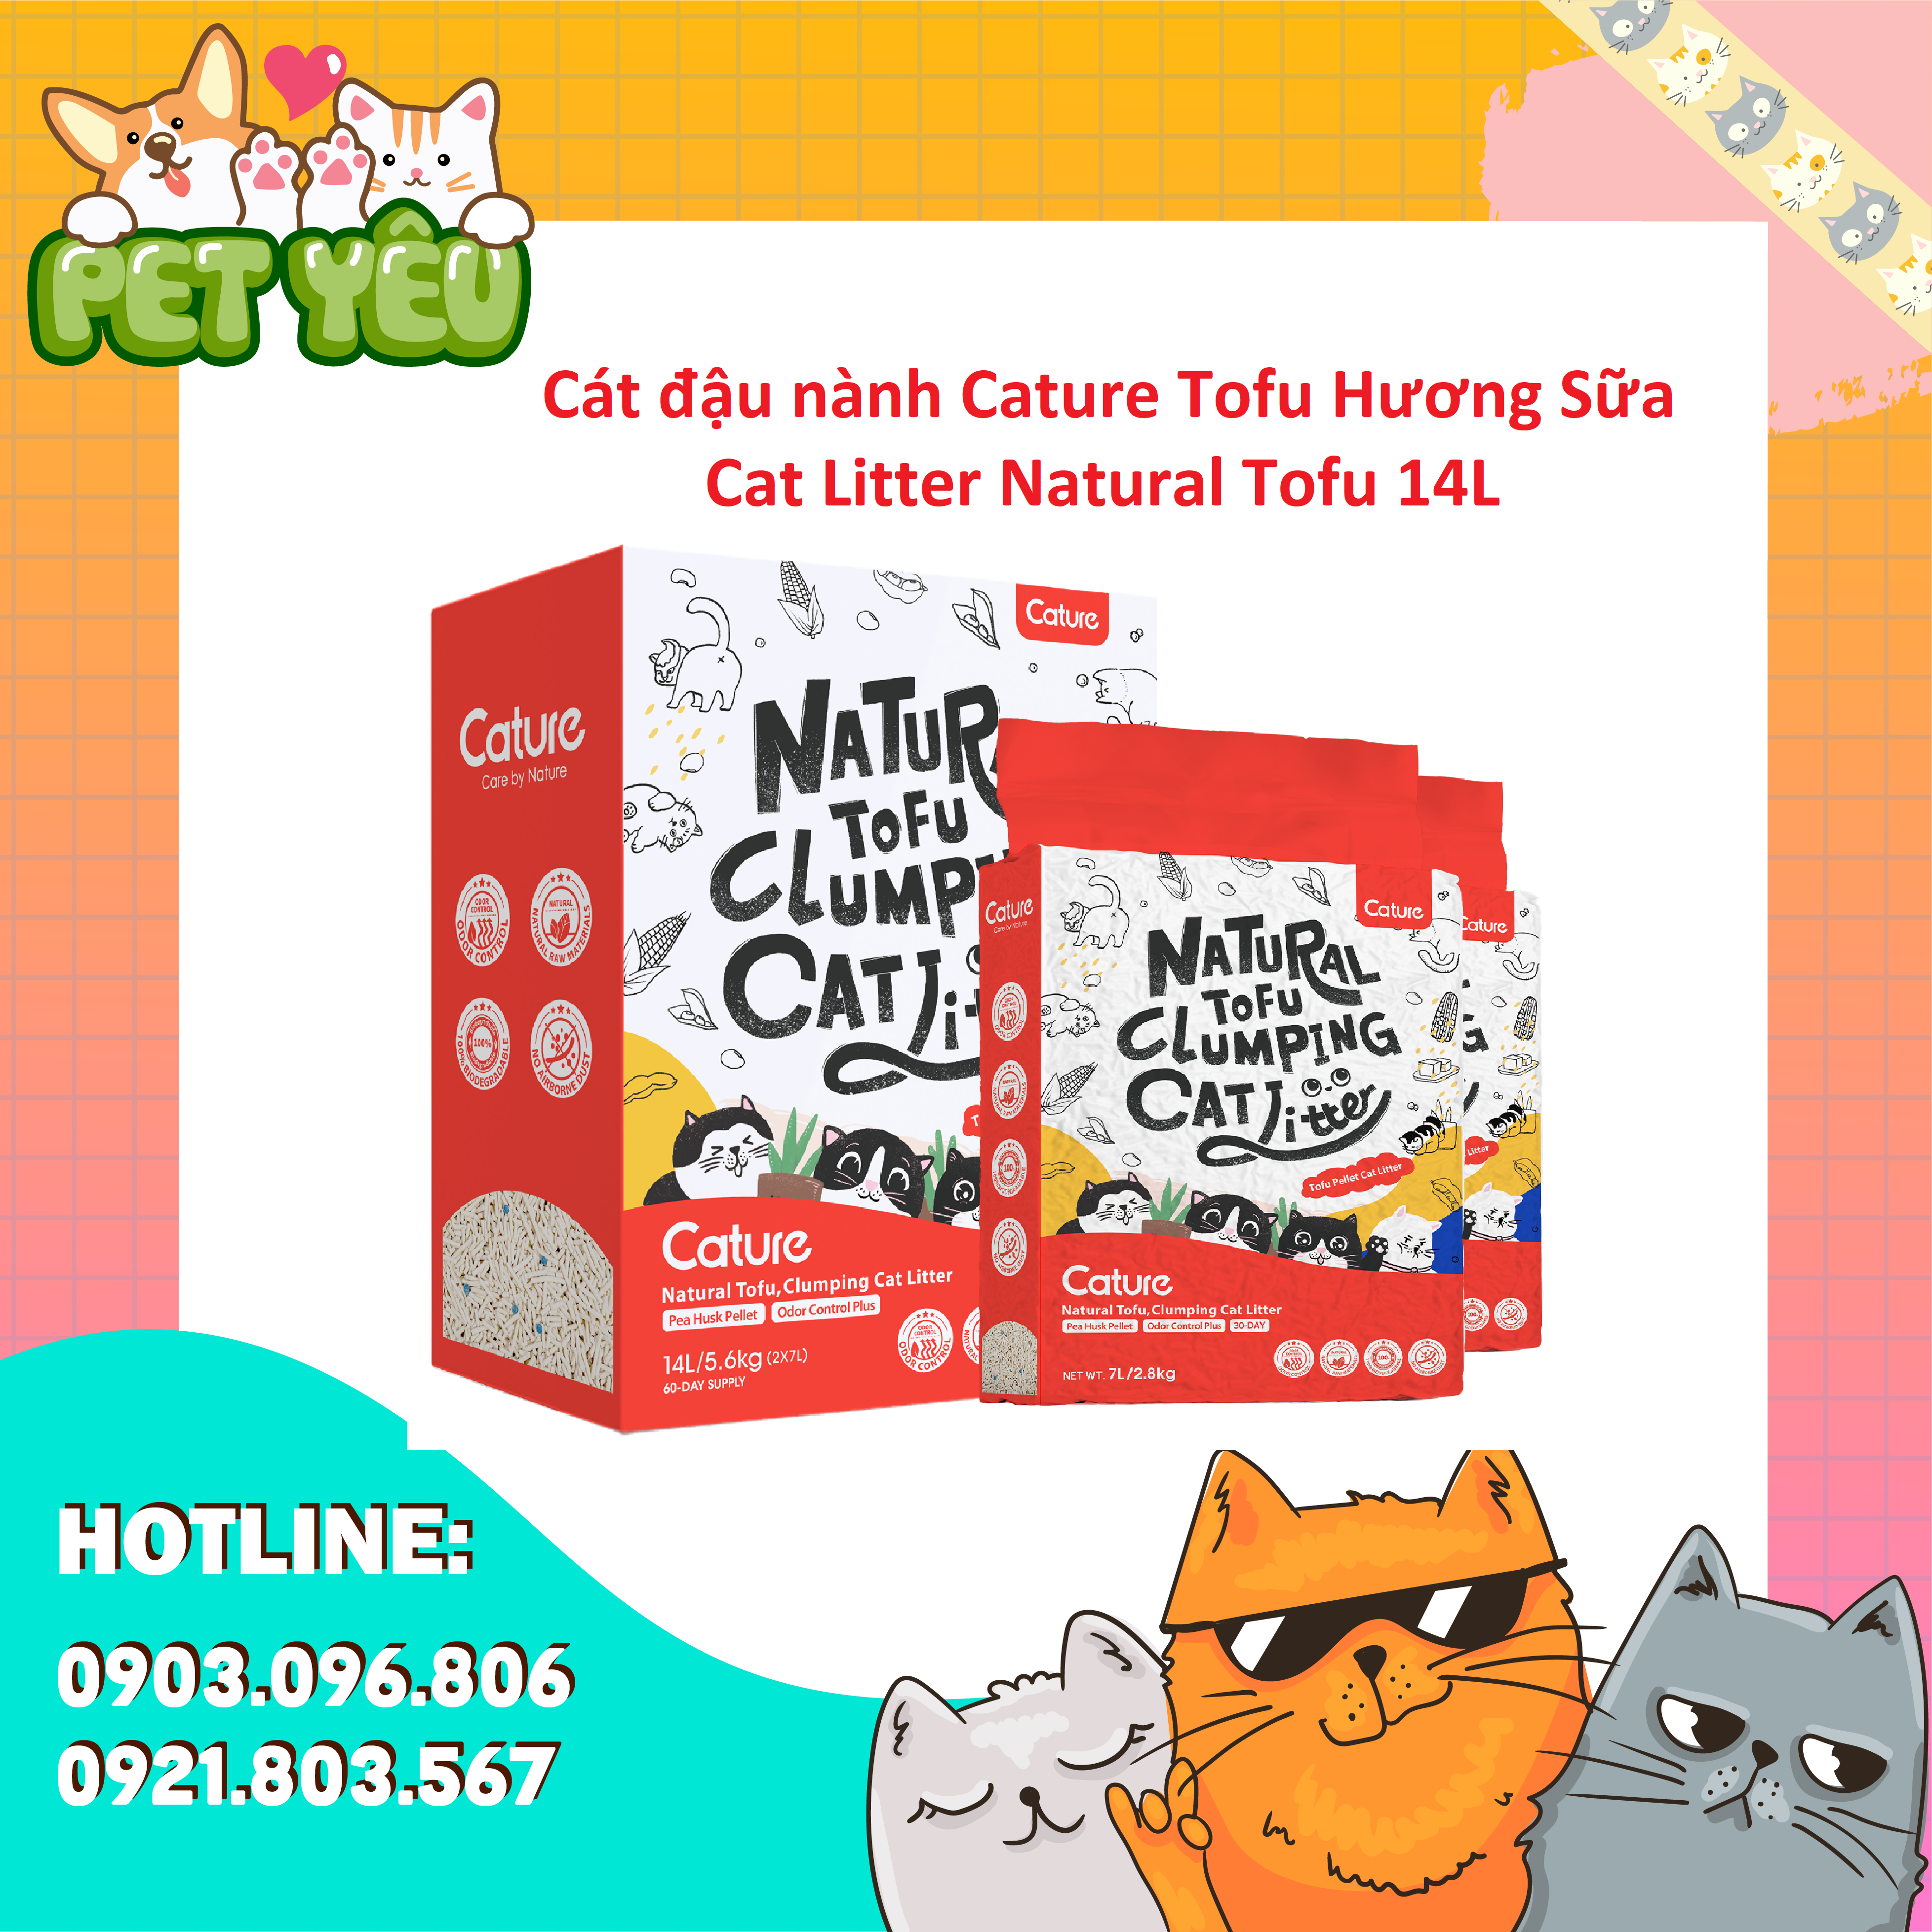 Cát đậu nành Cature Tofu Hương Sữa - Cat Litter Natural Tofu 14L